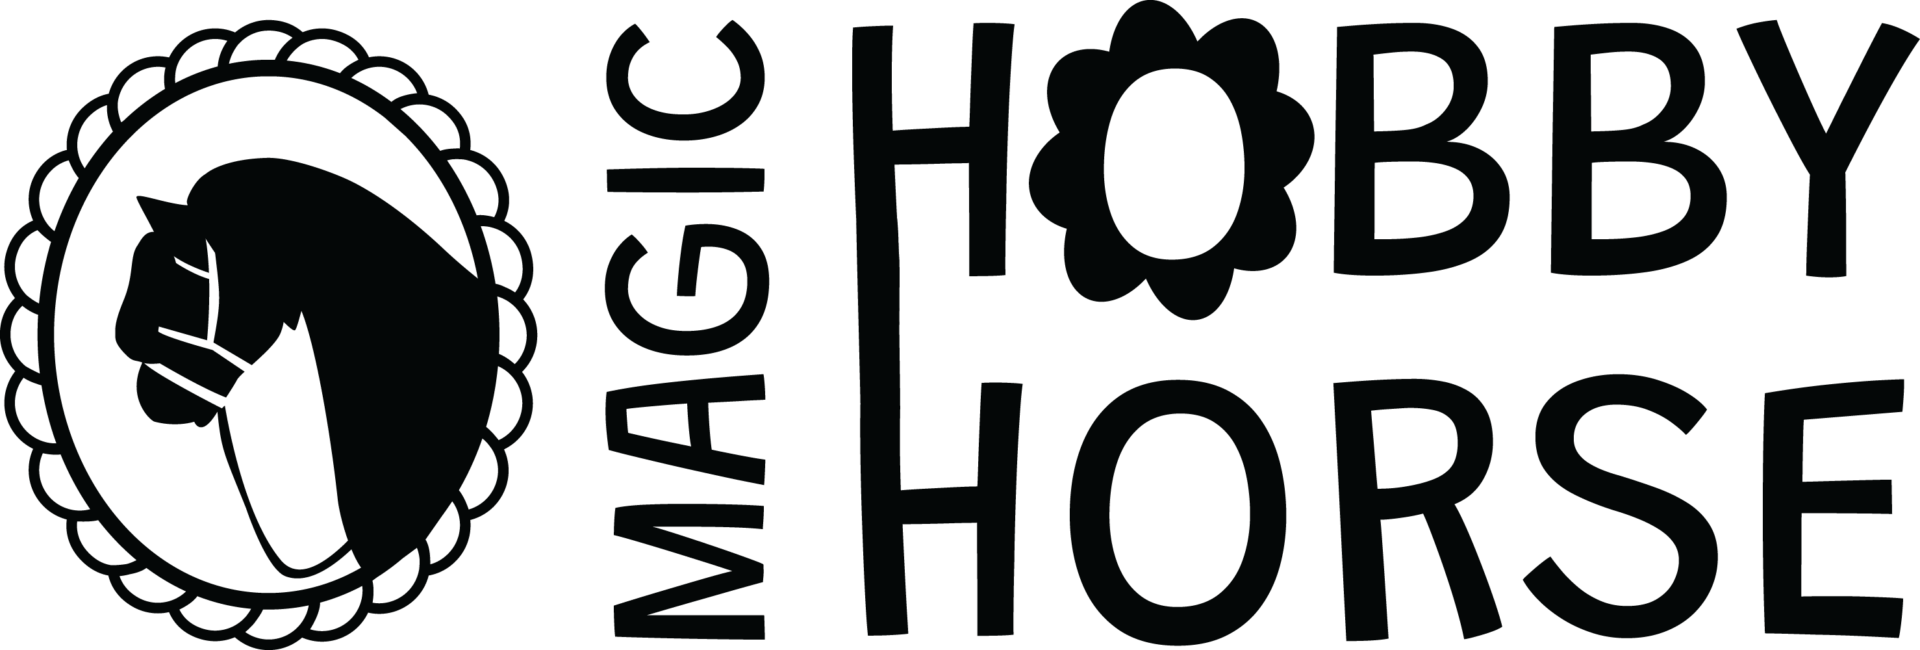 Magic Hobby Horse logo rękodzielnicze